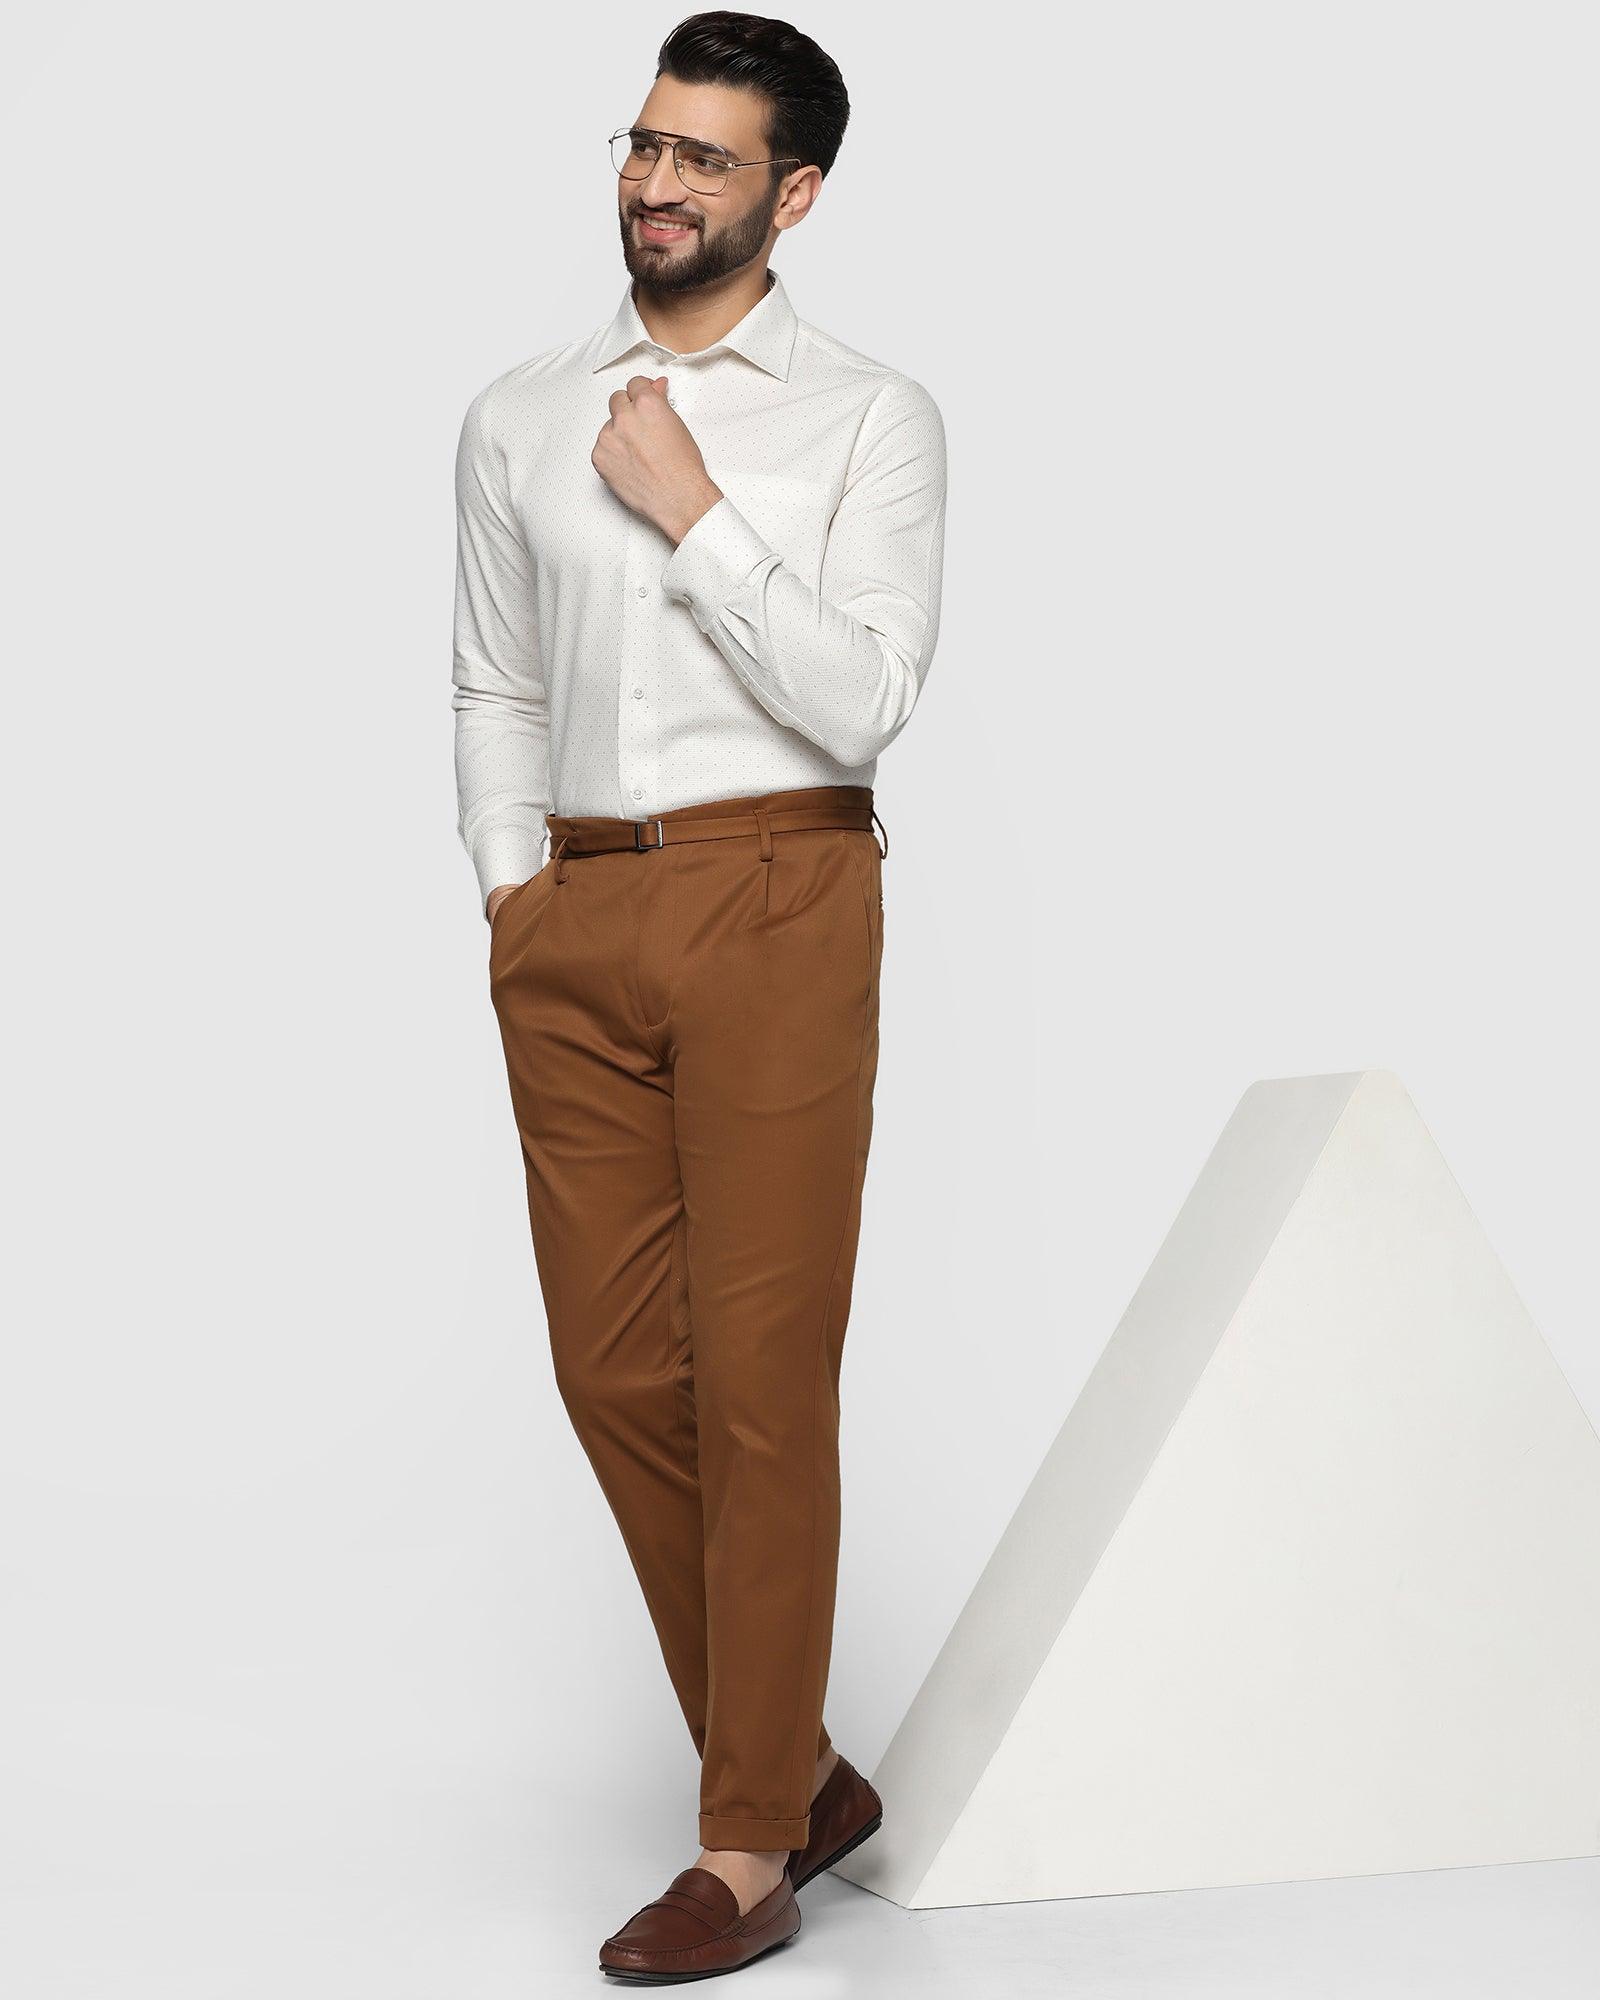 Formal Trouser: Browse Men Dark Brown Cotton Blend Formal Trouser on Cliths